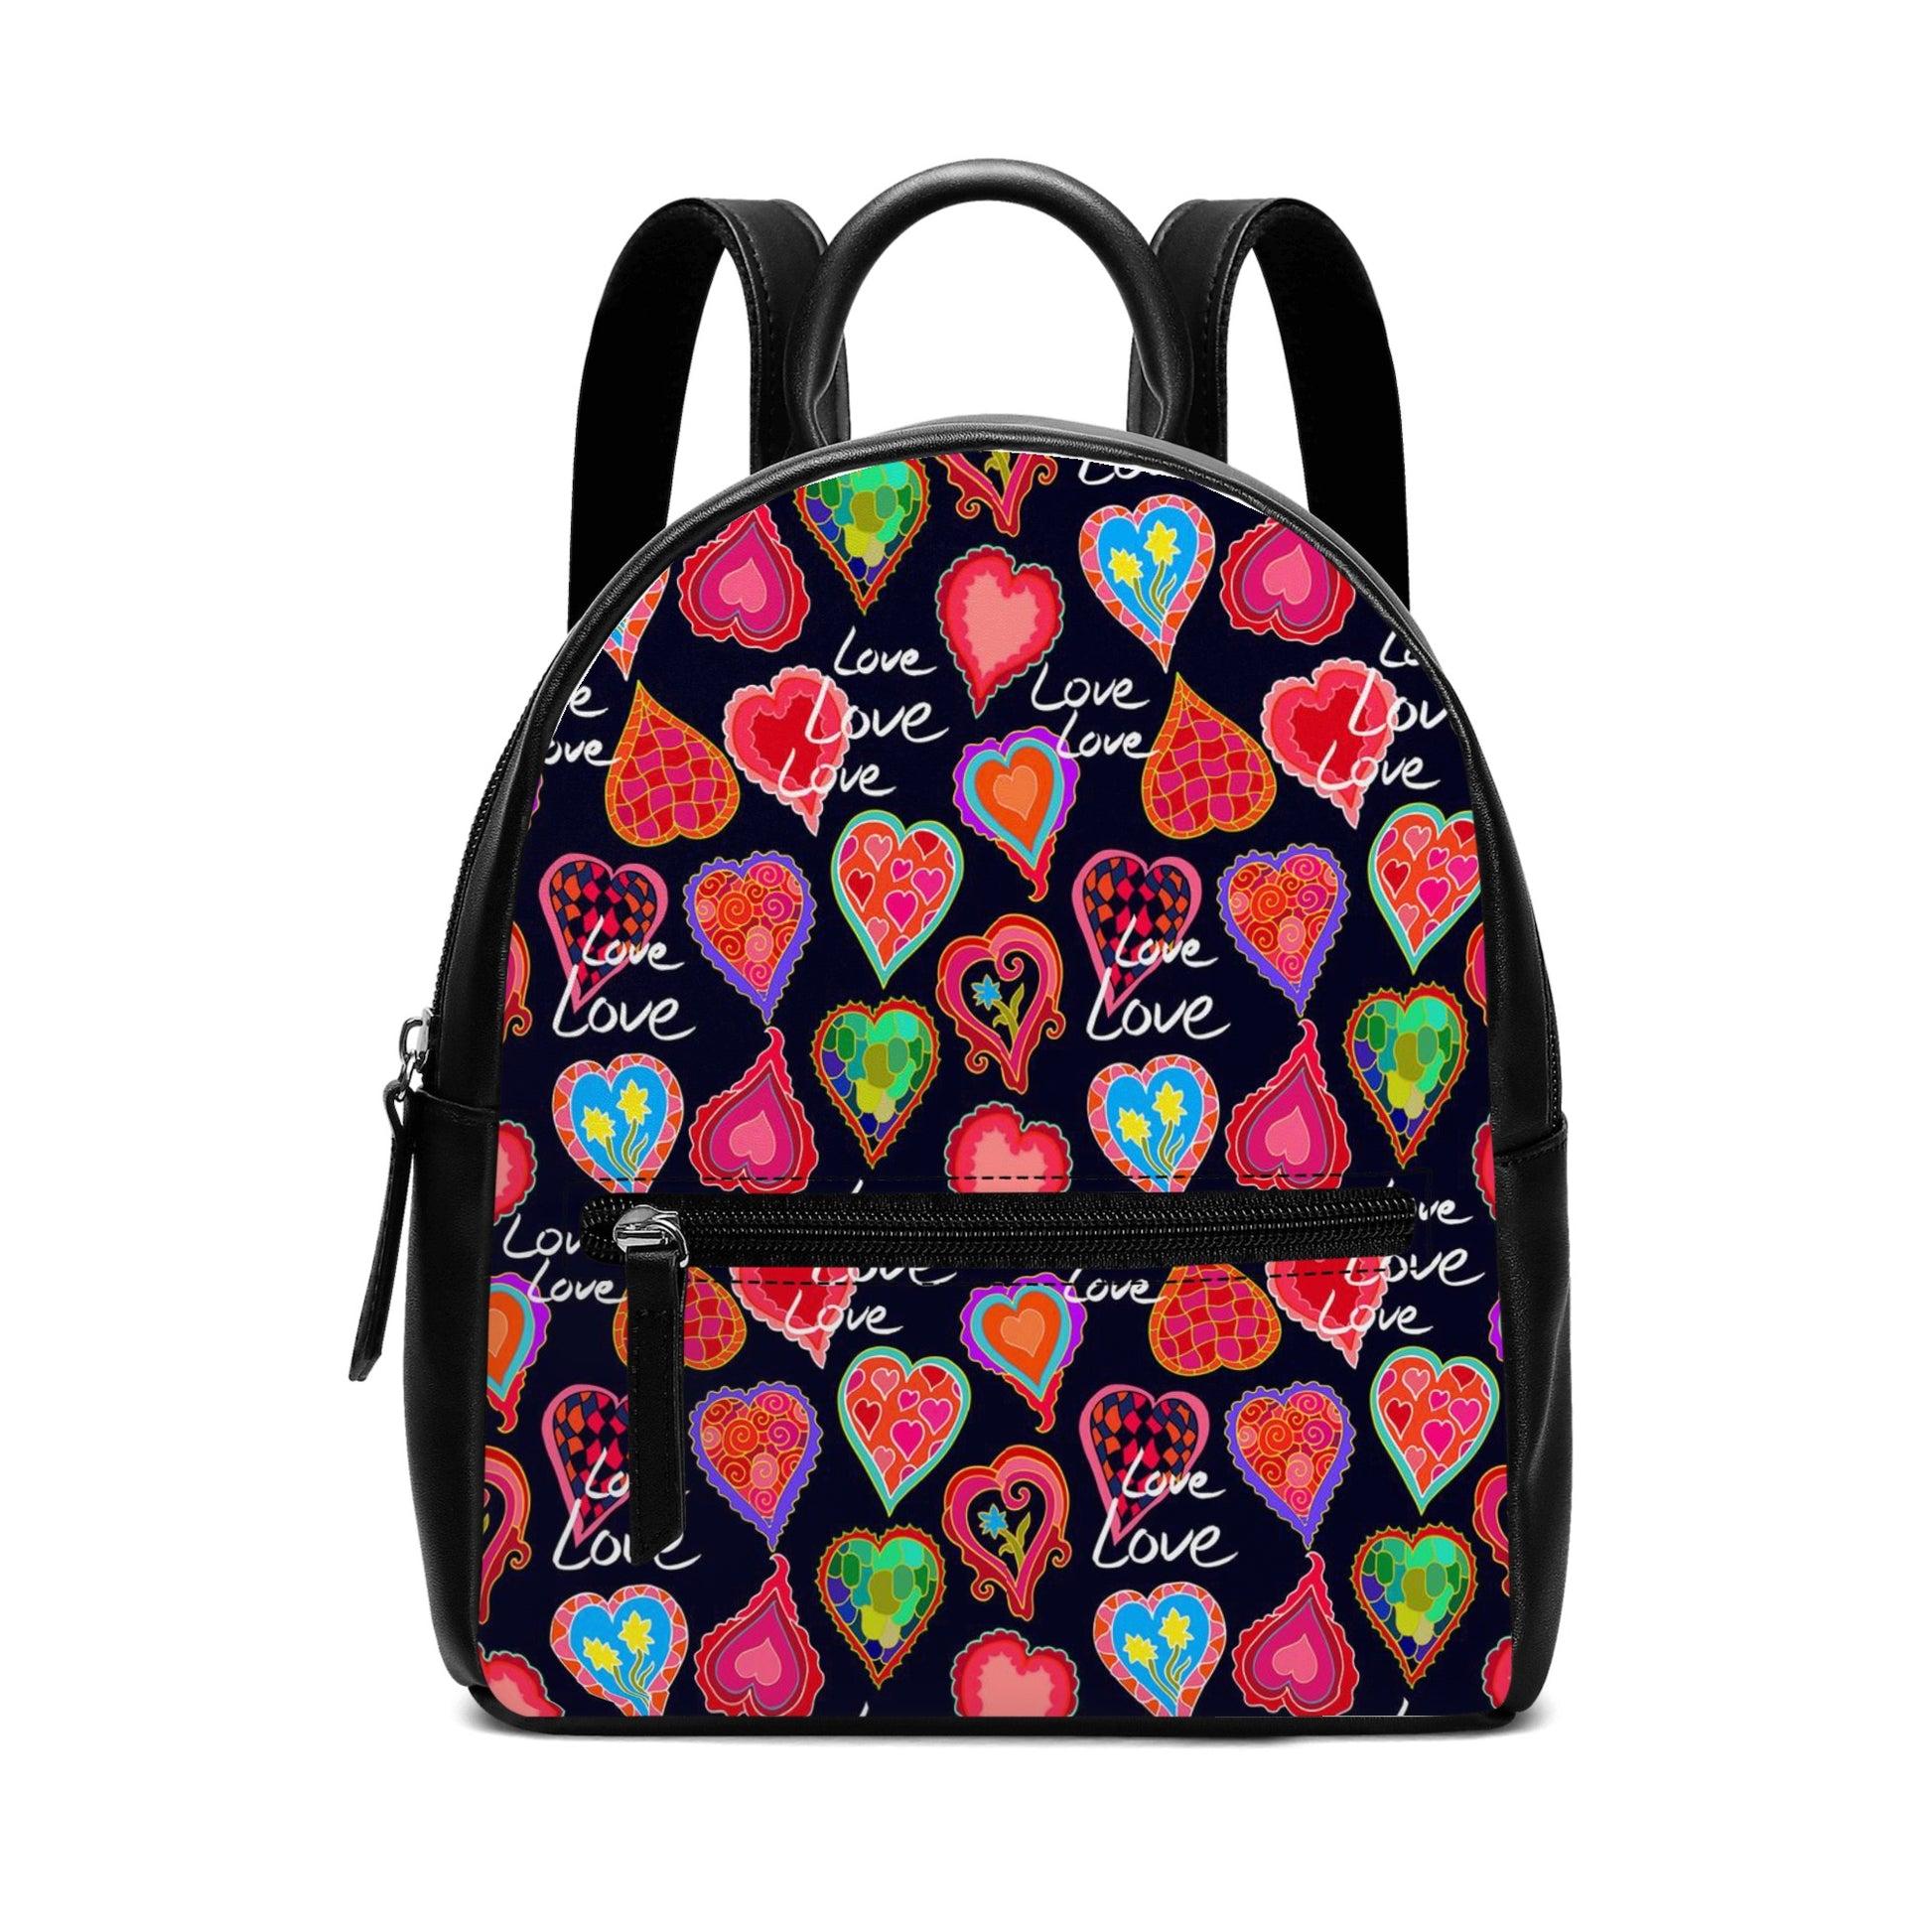 Cute PU Backpack. Hearts and Love You design